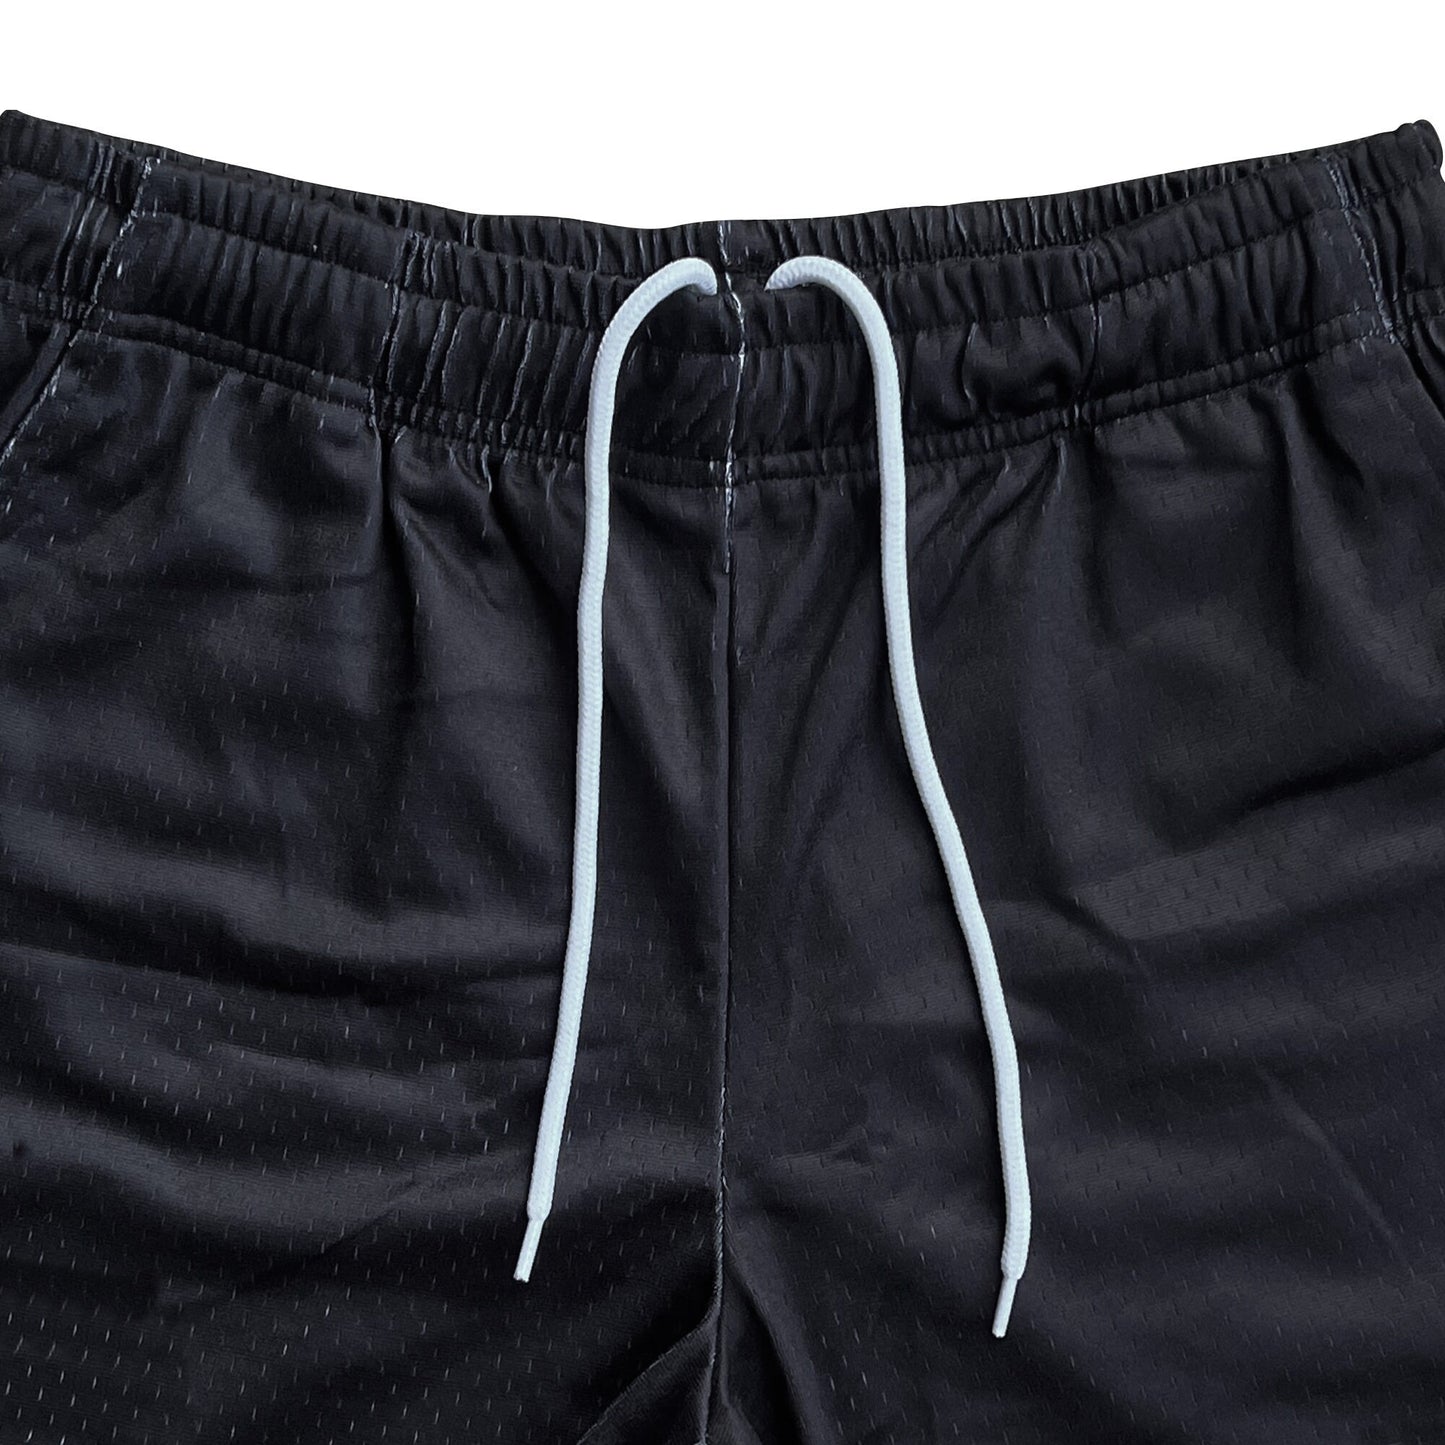 Black - Premium Mesh JJ Shorts - 5 Inch Inseam – JJshorts